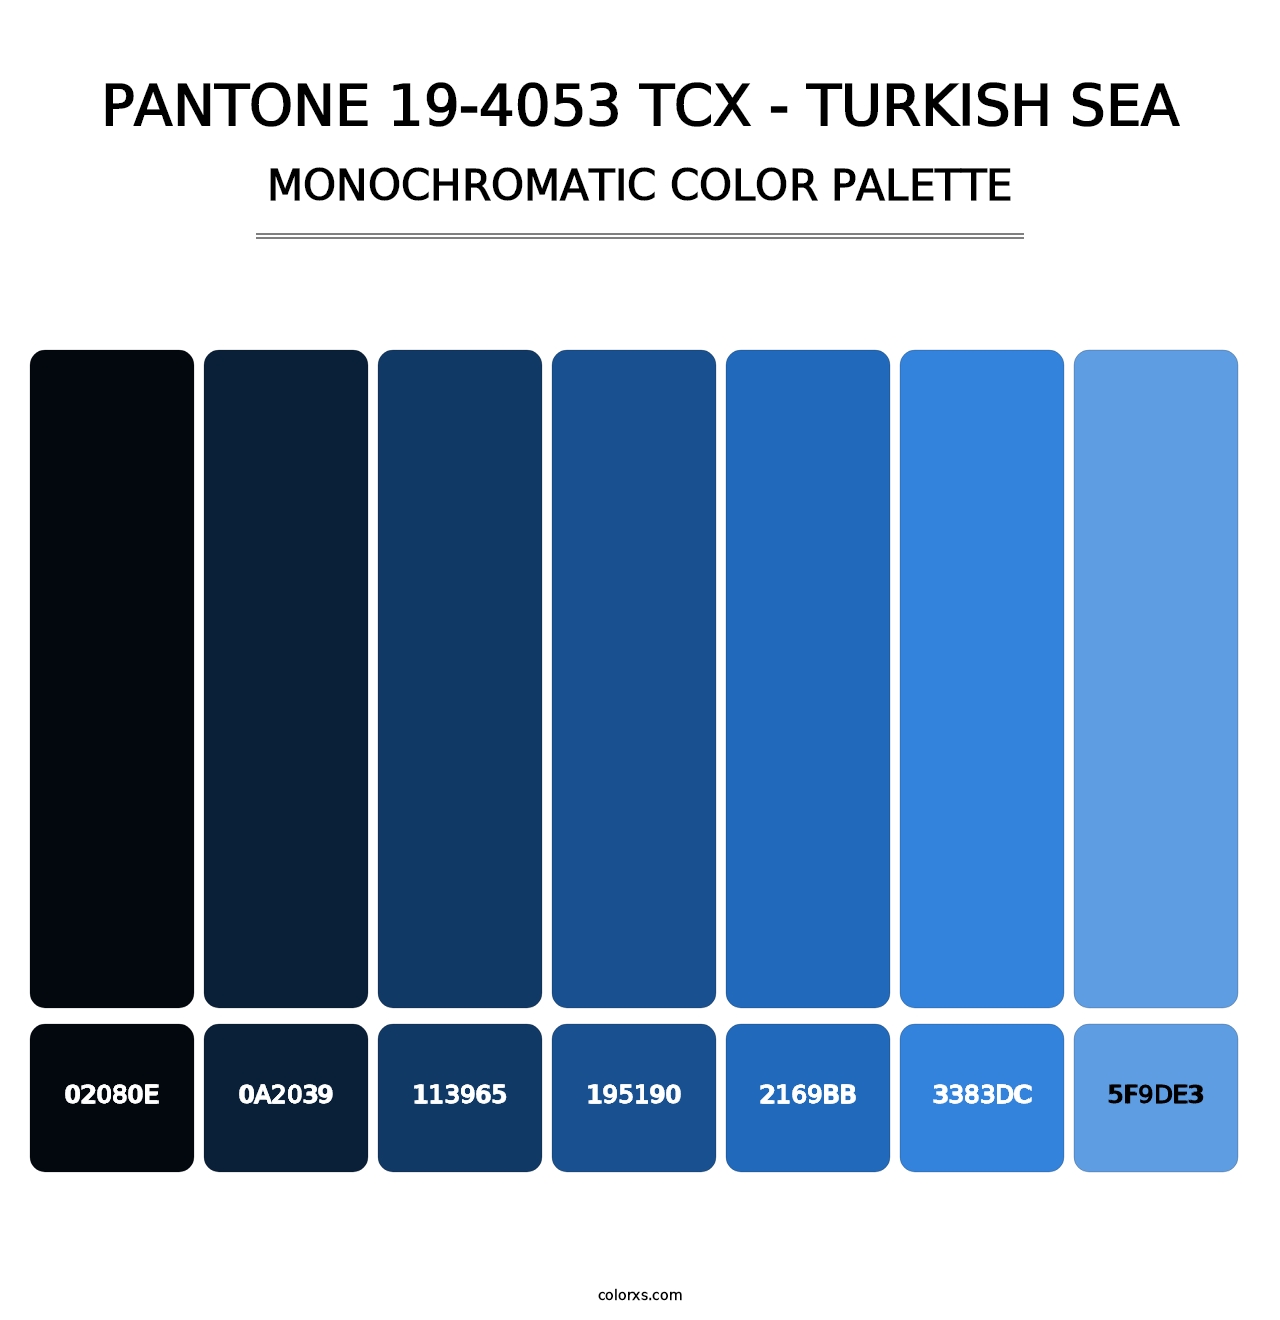 PANTONE 19-4053 TCX - Turkish Sea - Monochromatic Color Palette